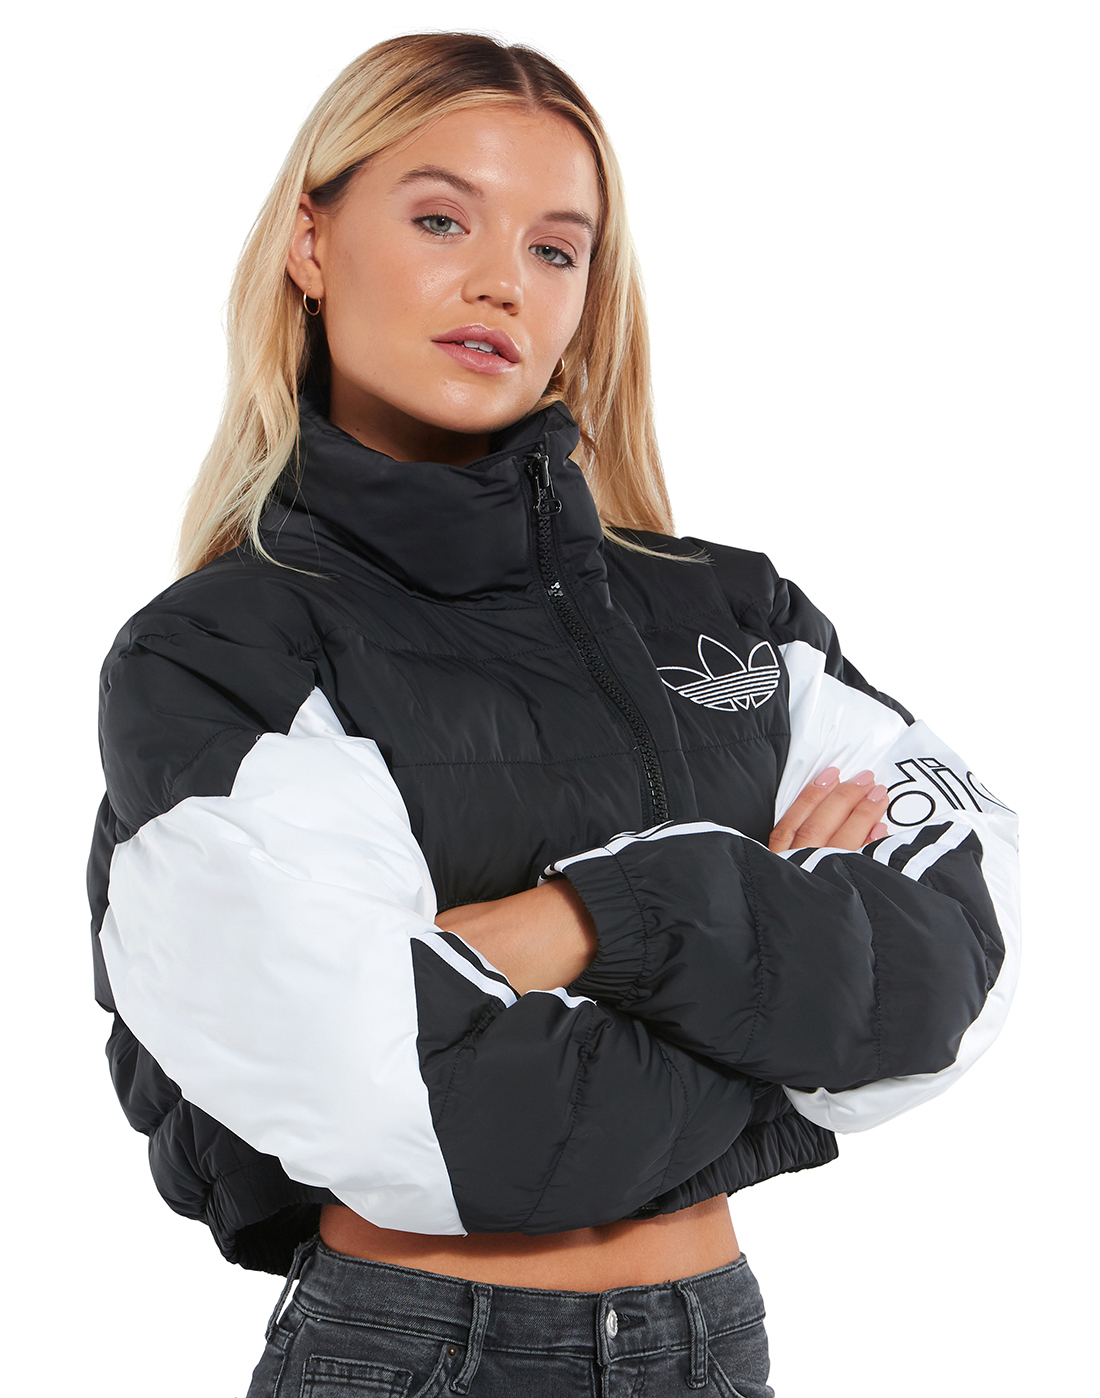 solely Hardship Profession adidas Originals Womens Cropped Puffer Jacket - Black | Life Style Sports EU